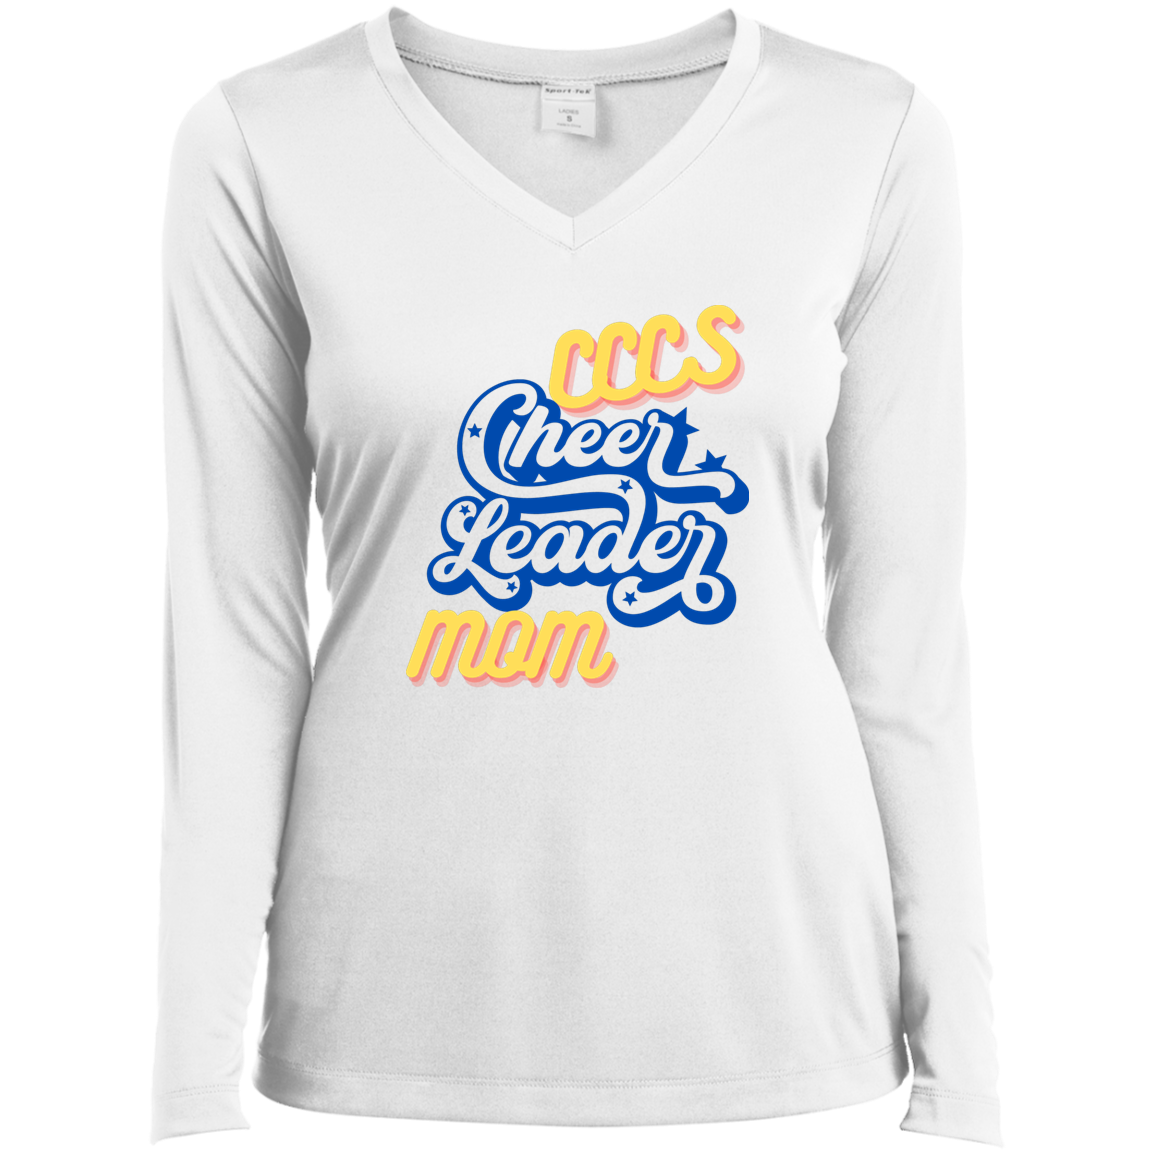 CCCS Cheer Mom- Ladies’ Long Sleeve Performance V-Neck Tee